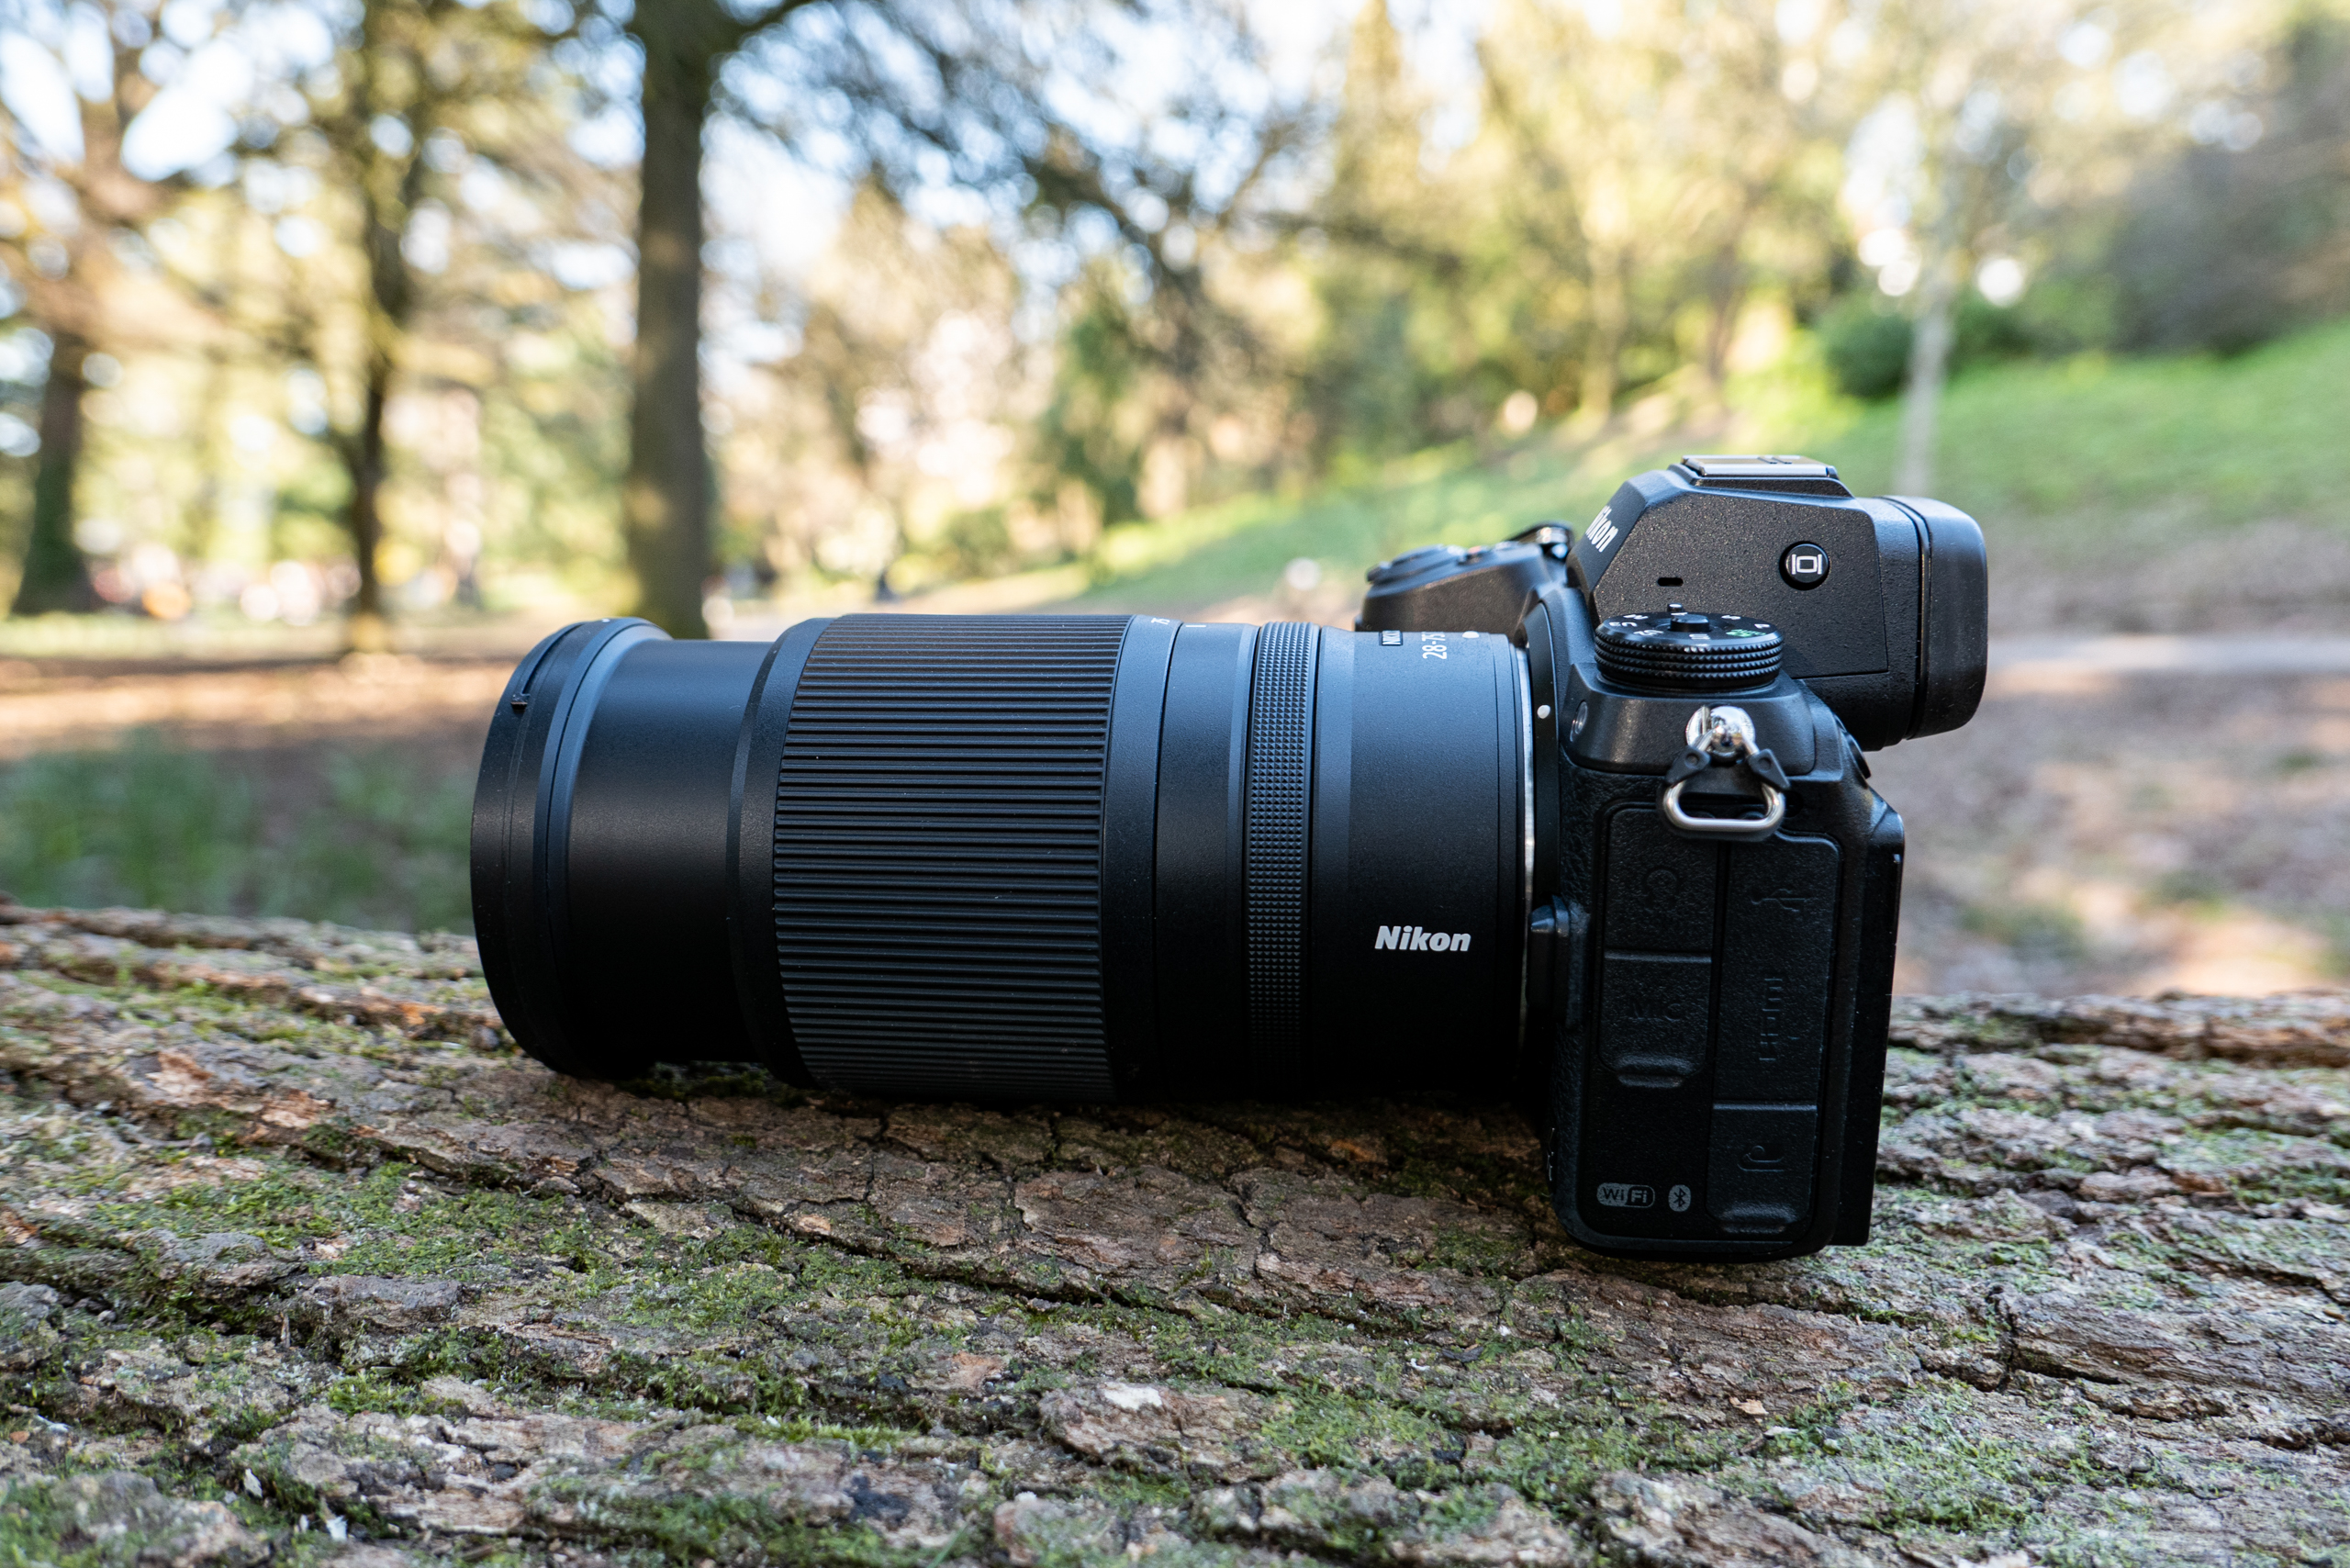 Nikkor 28-75mm lens side view, extended